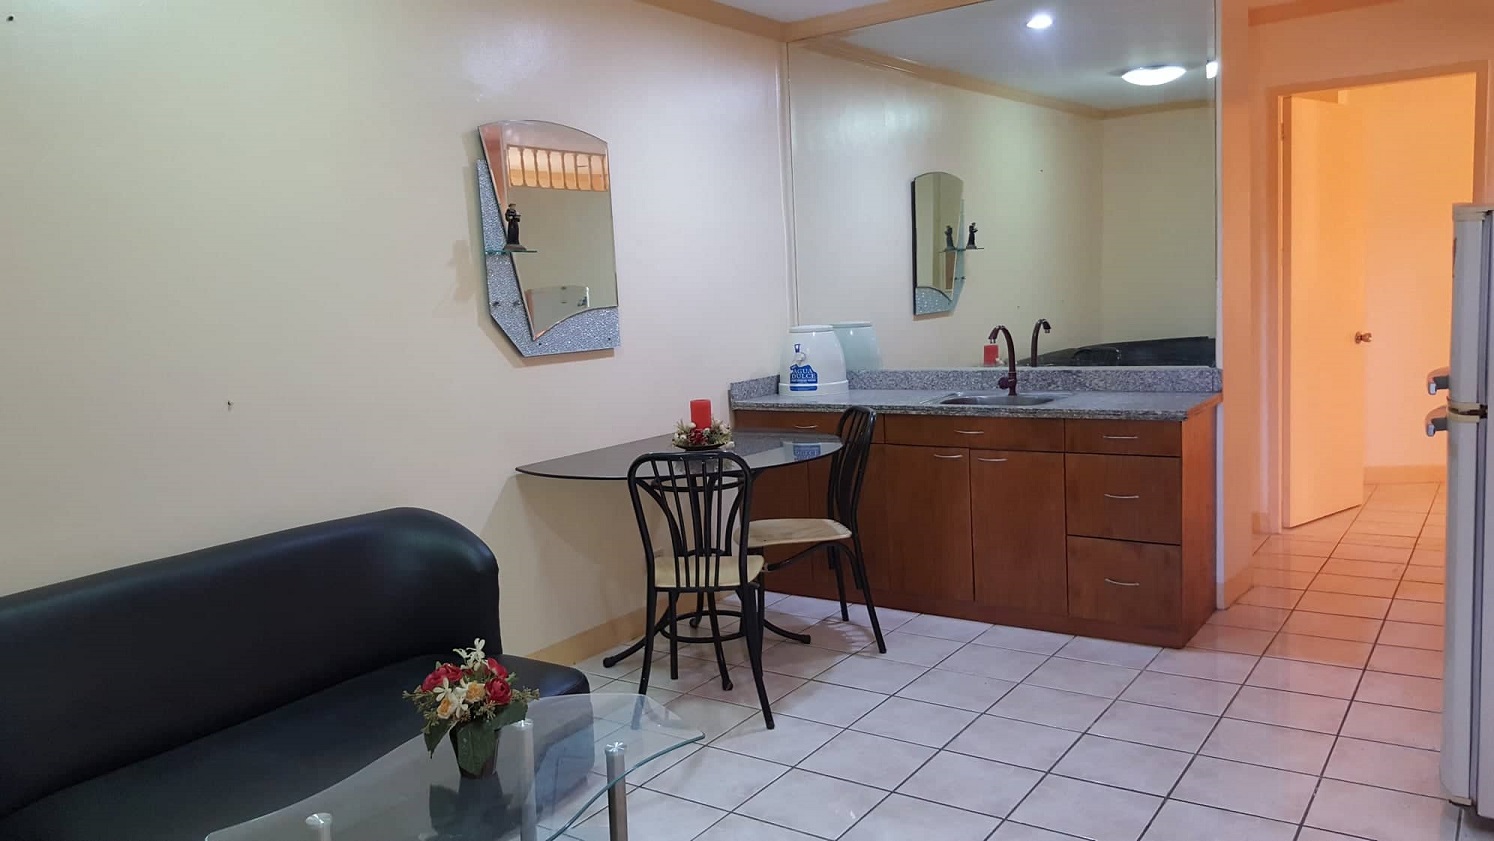 2-bedrooms-building-apartment-located-in-lahug-cebu-city